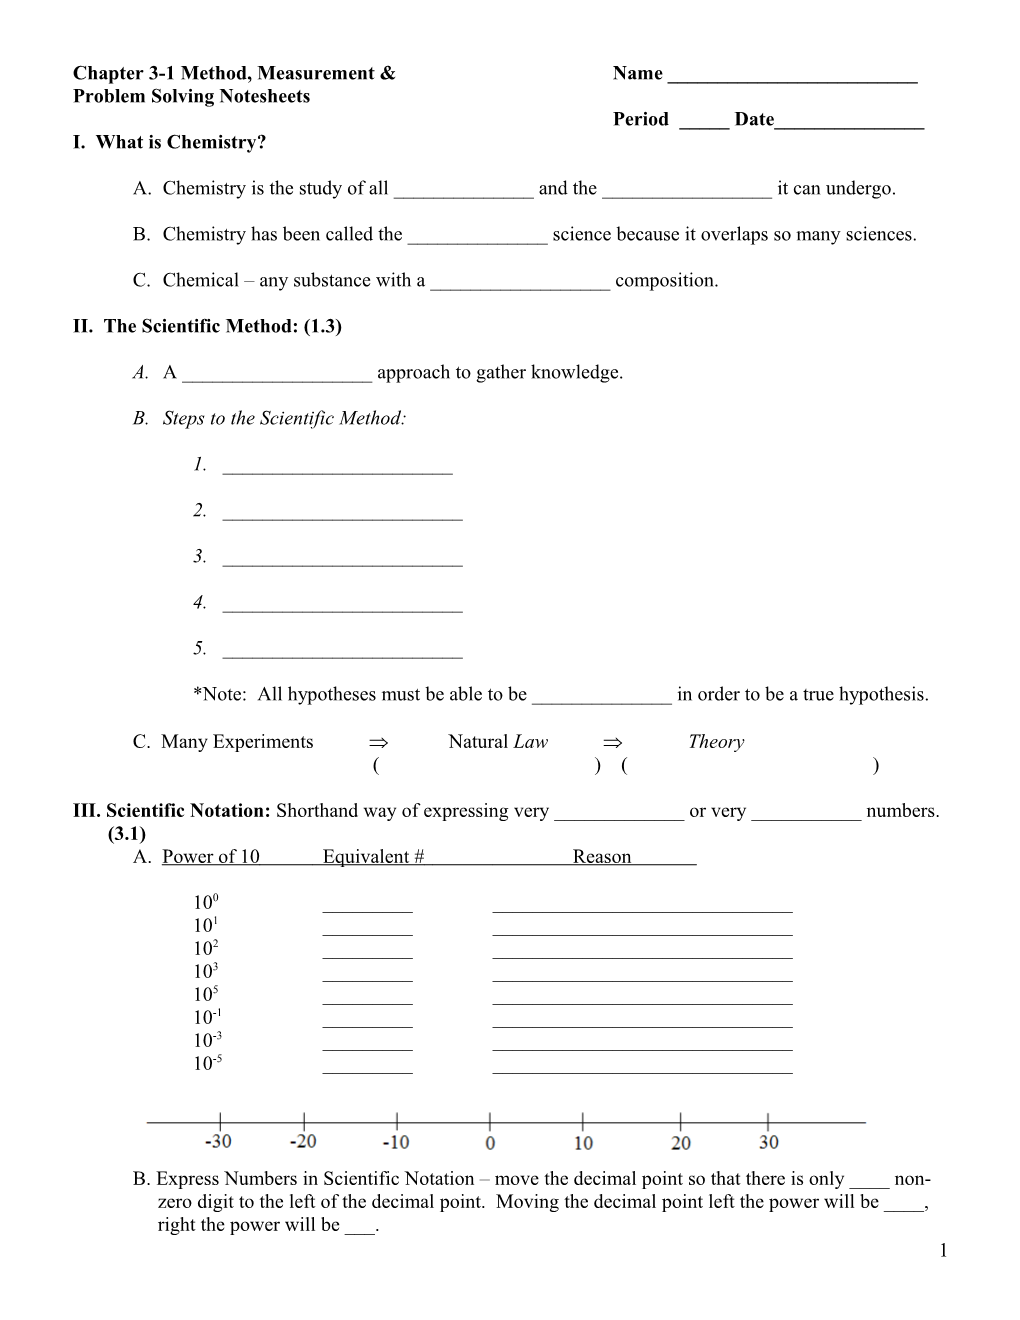 Chapter 3-1 Method, Measurement &Name ______Problem Solving Notesheets